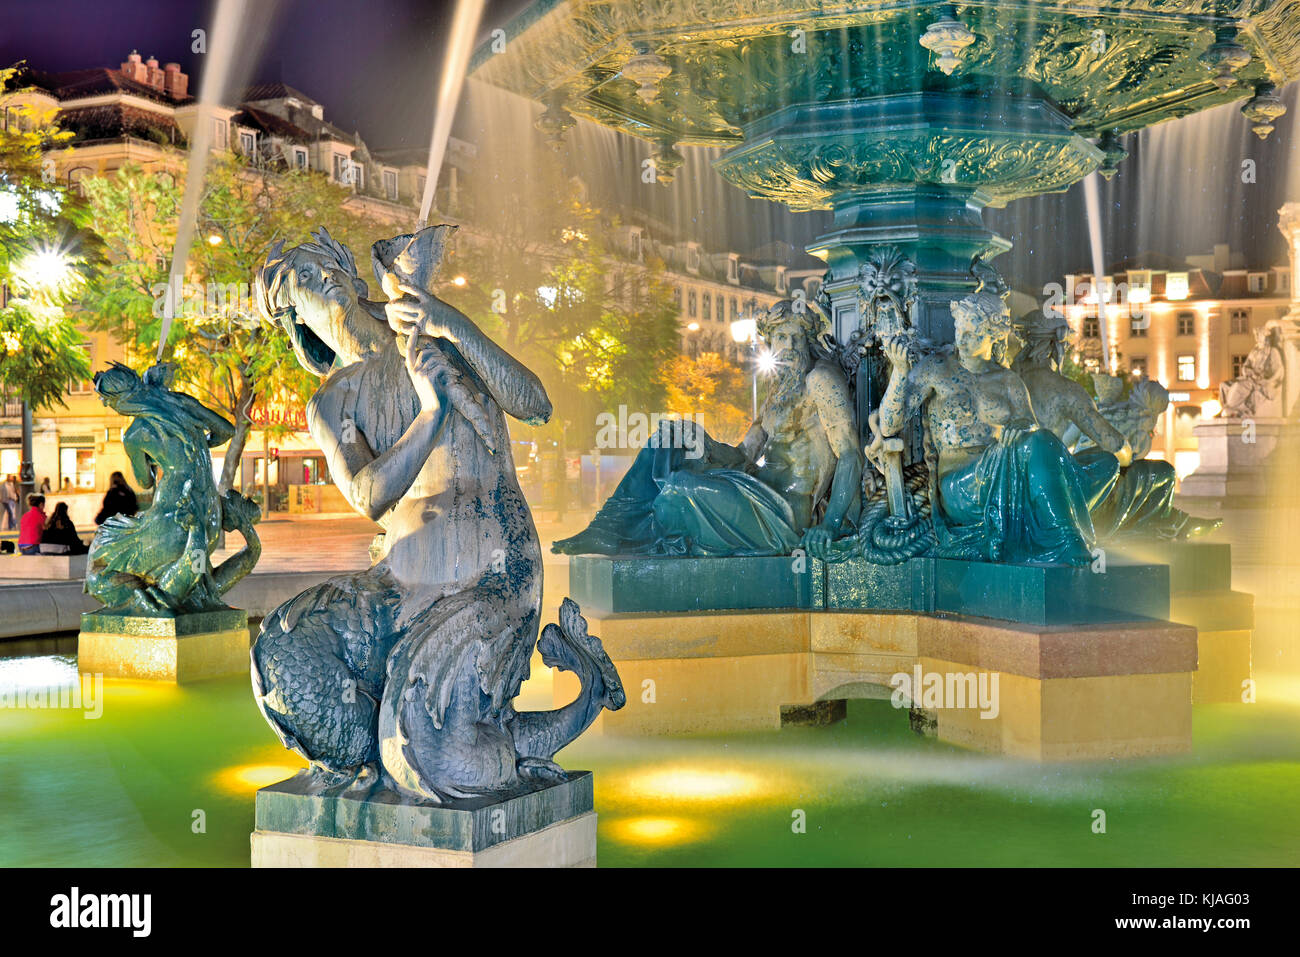 Nocturnal illuminated fountain with mytholical figures Stock Photo